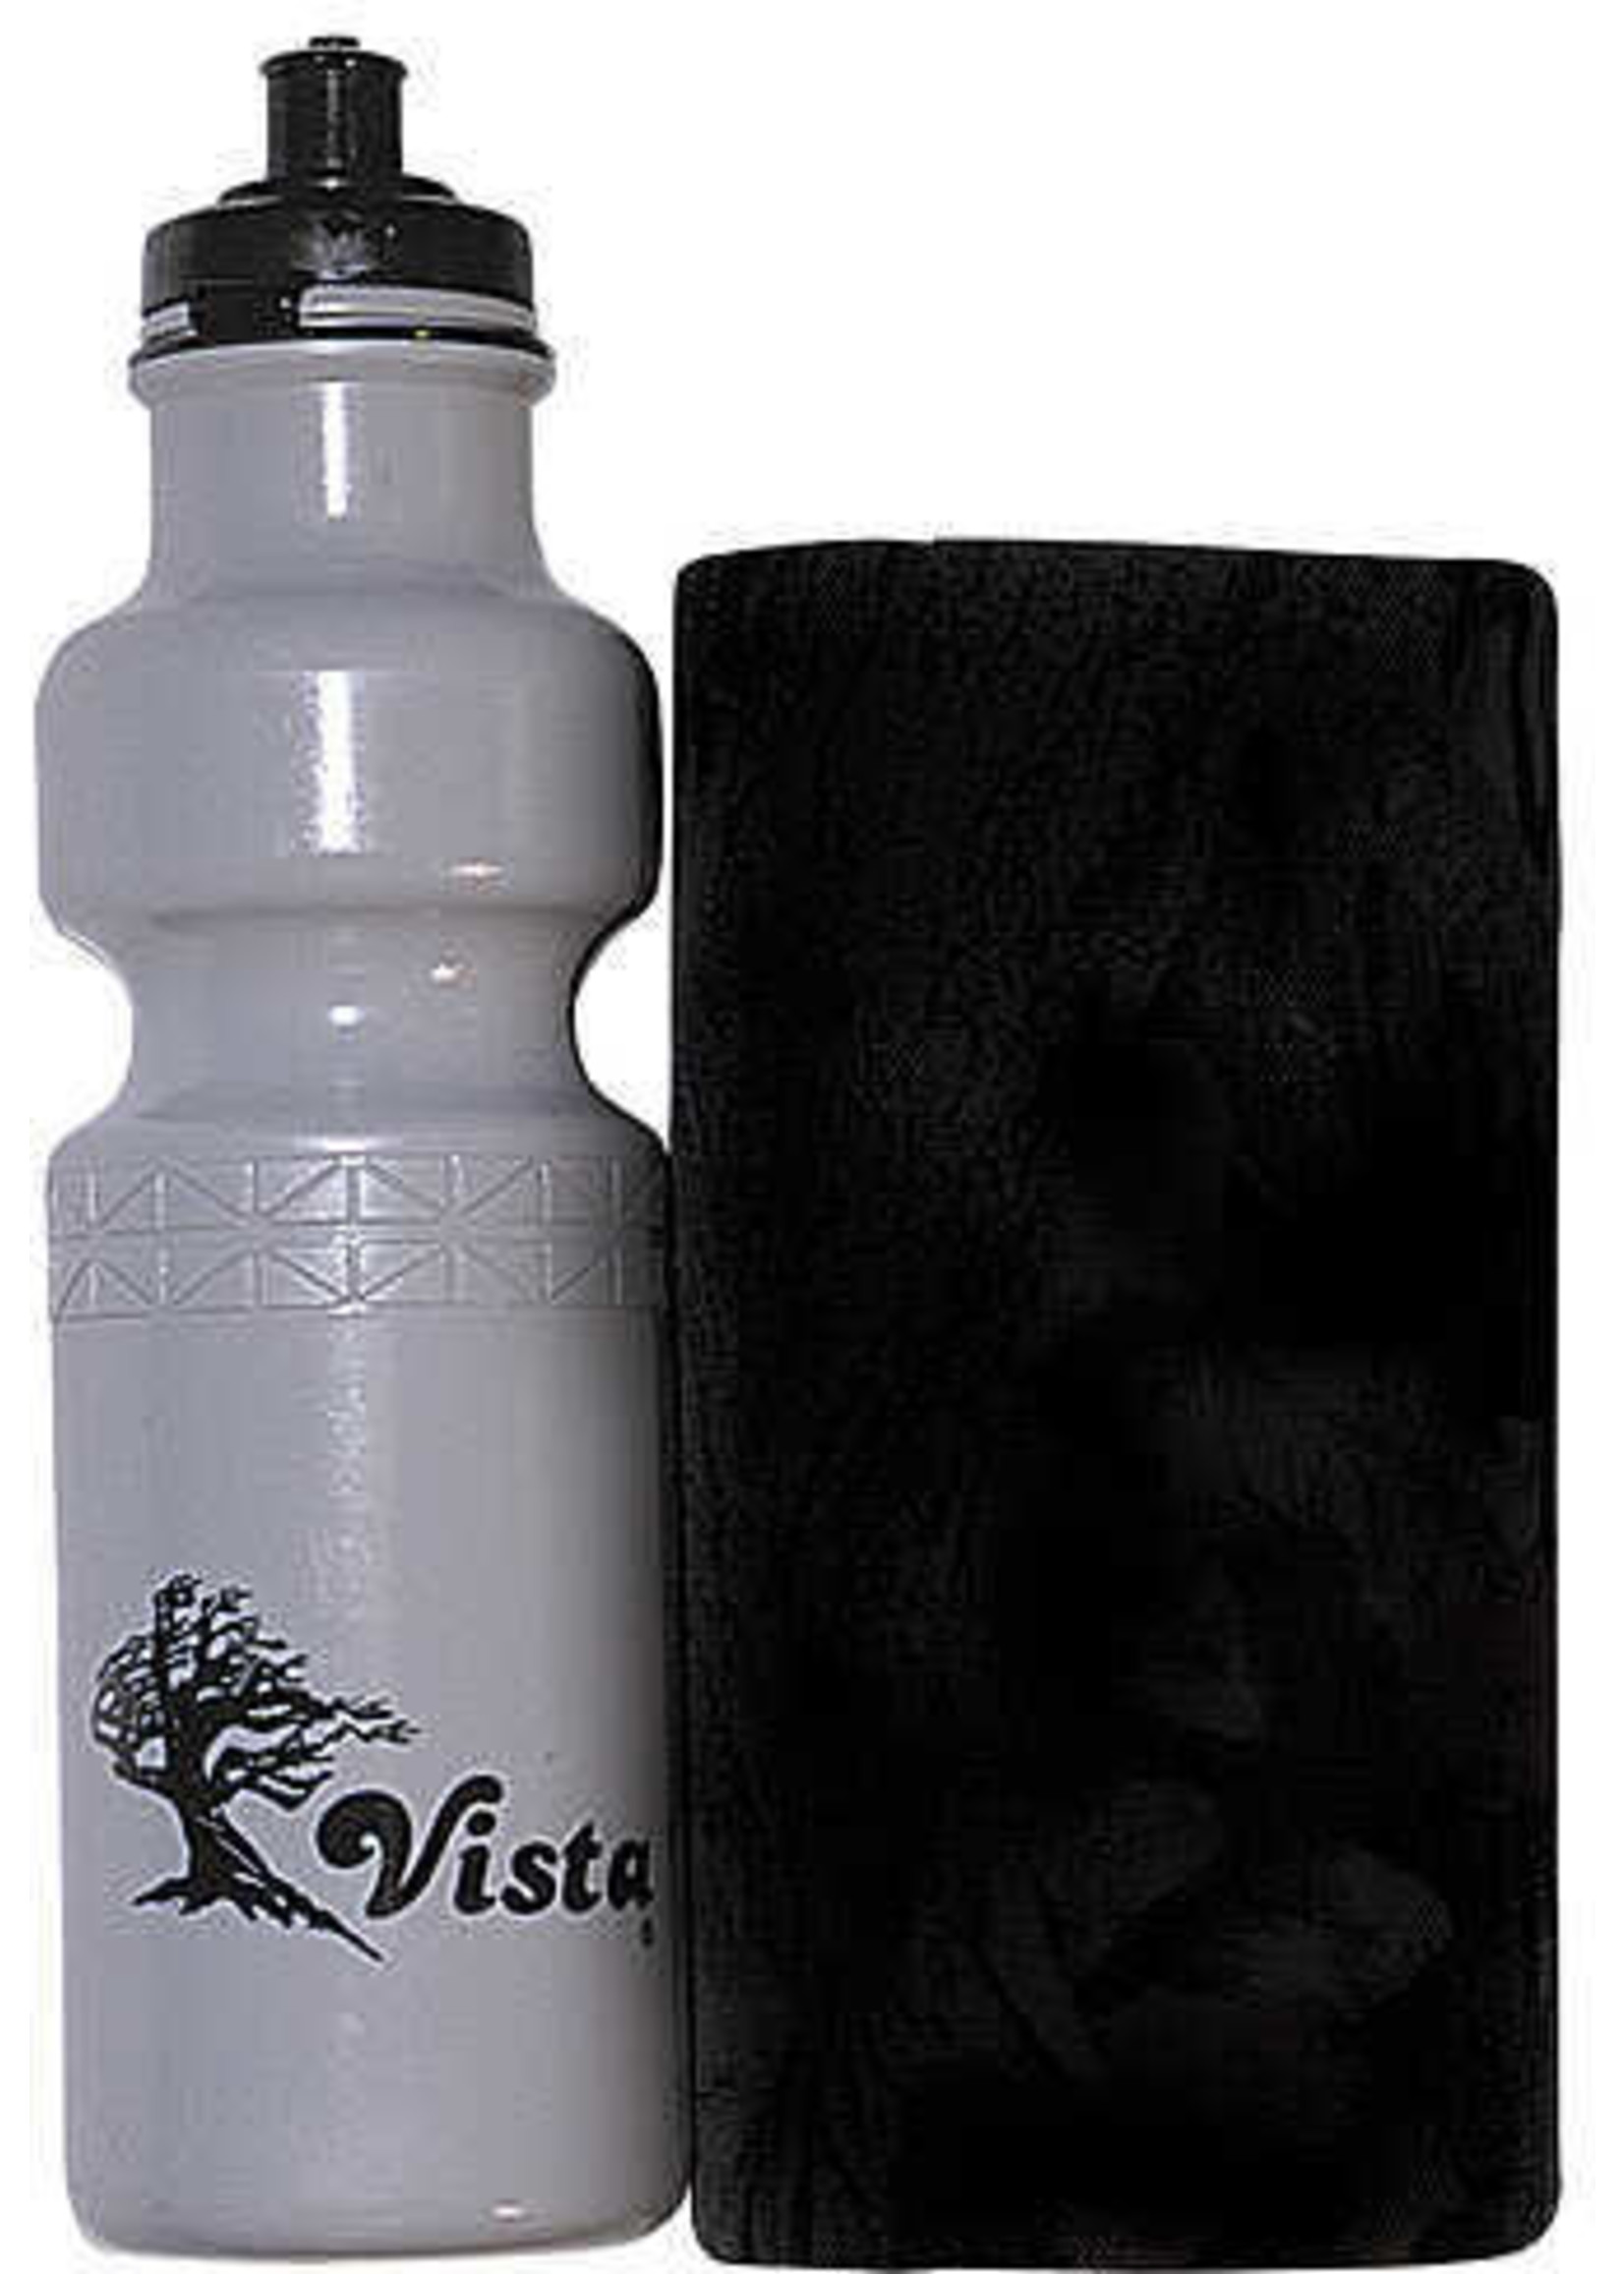 Vista rio grande bottle with insulated holder